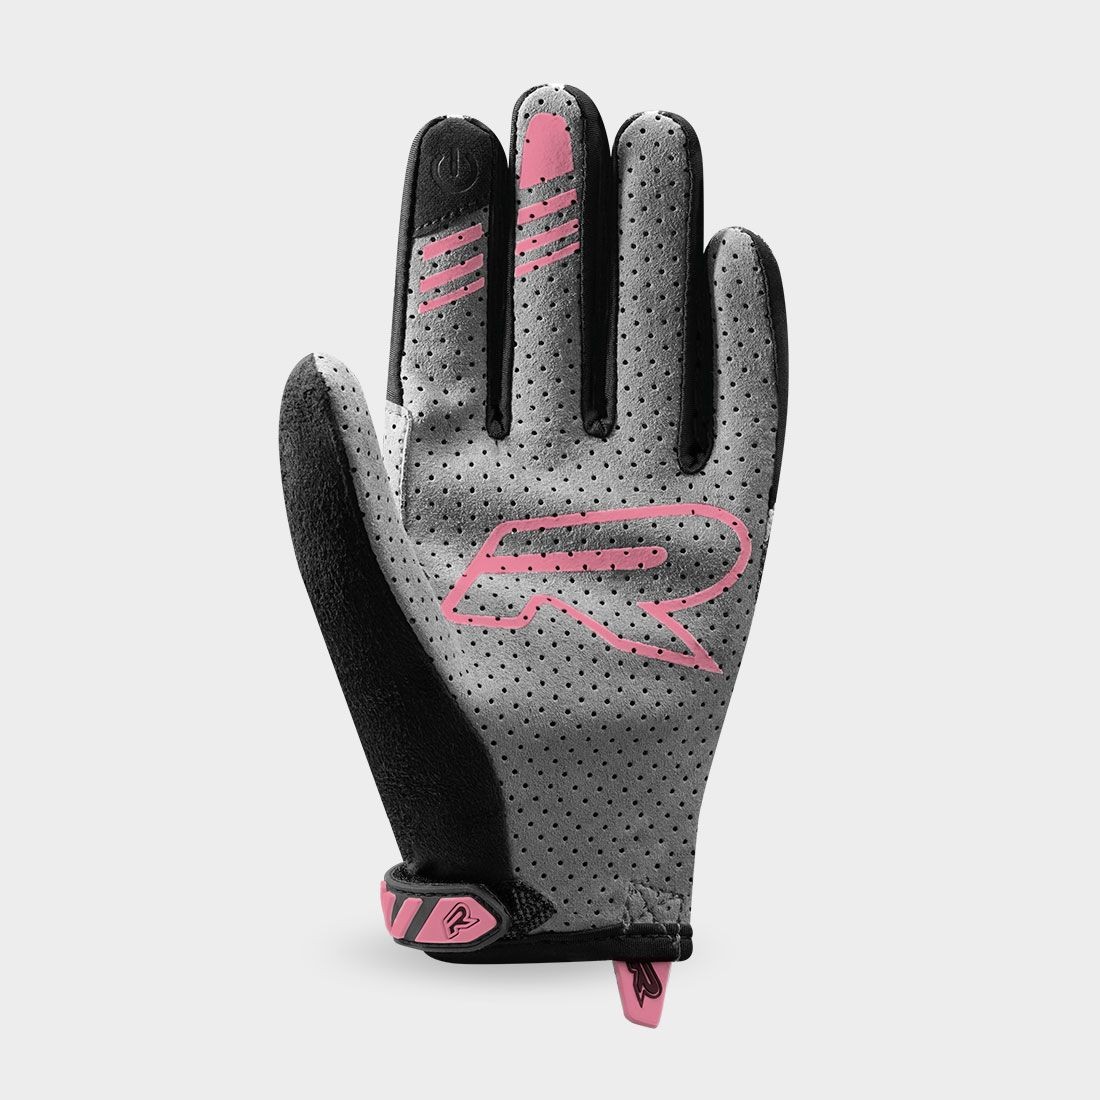 GP STYLE - Enduro bike gloves